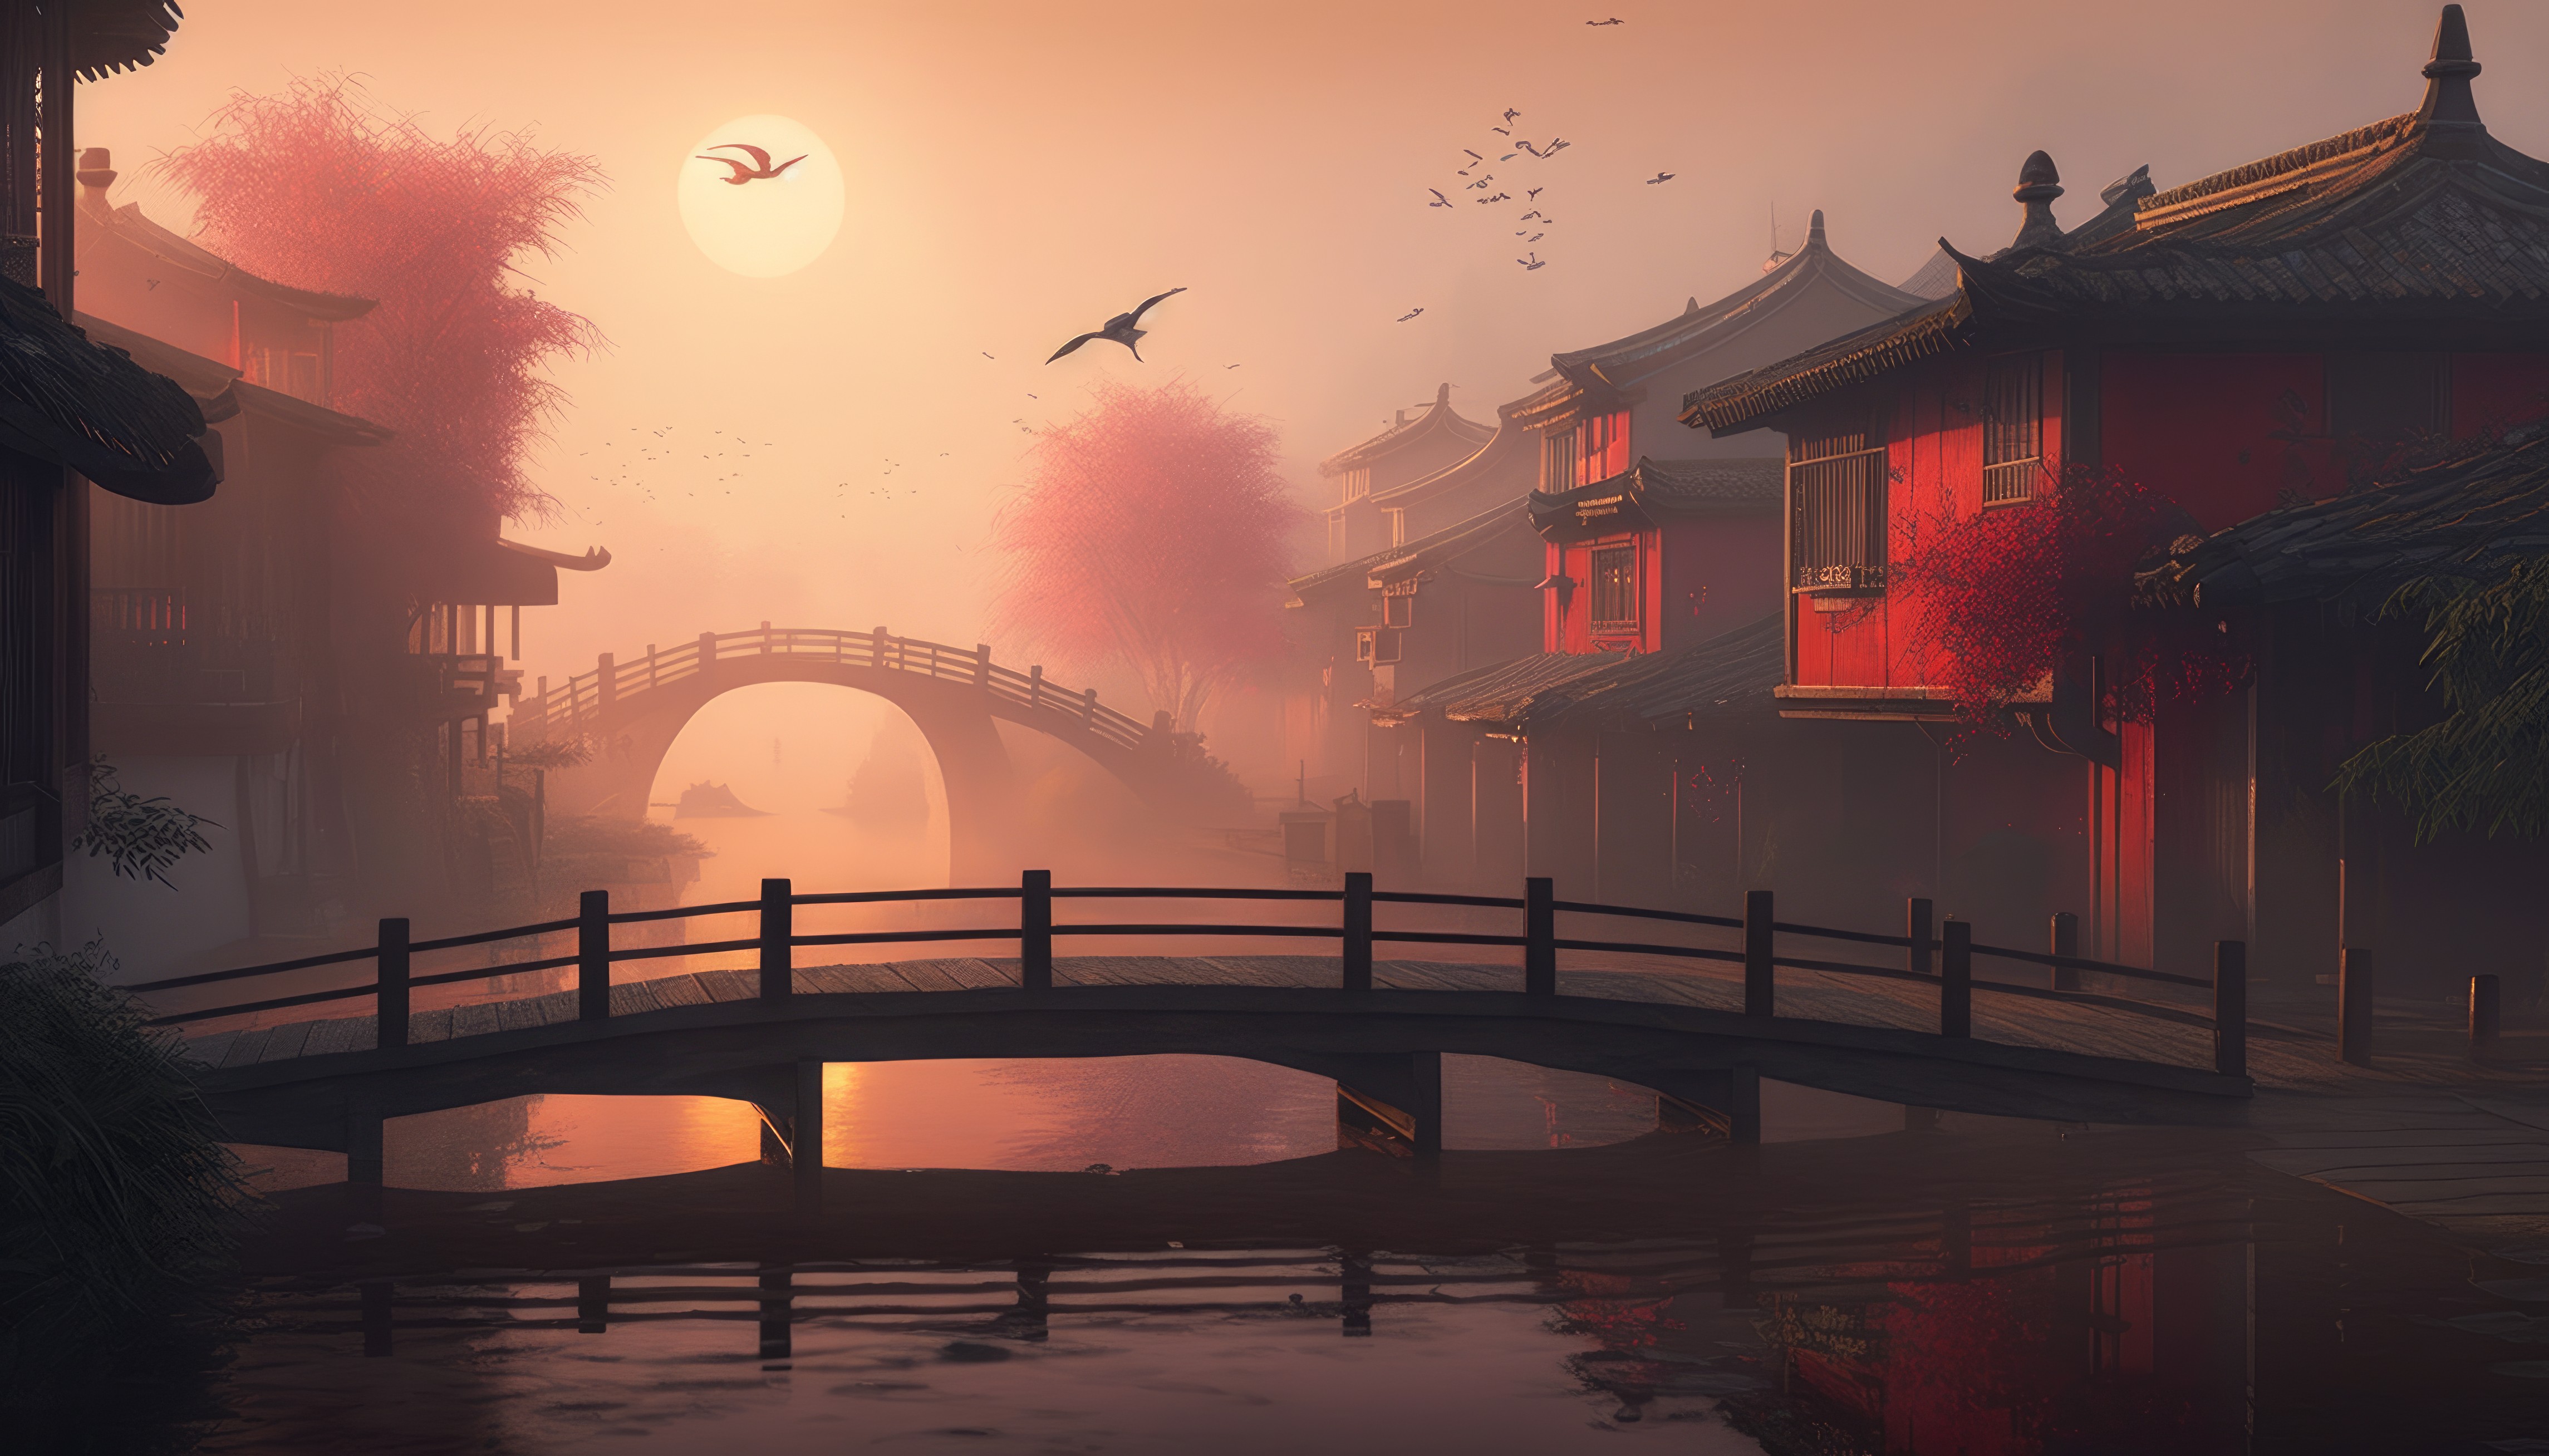 Wallpaper, ai art, illustration, bridge, China, village 4579x2616